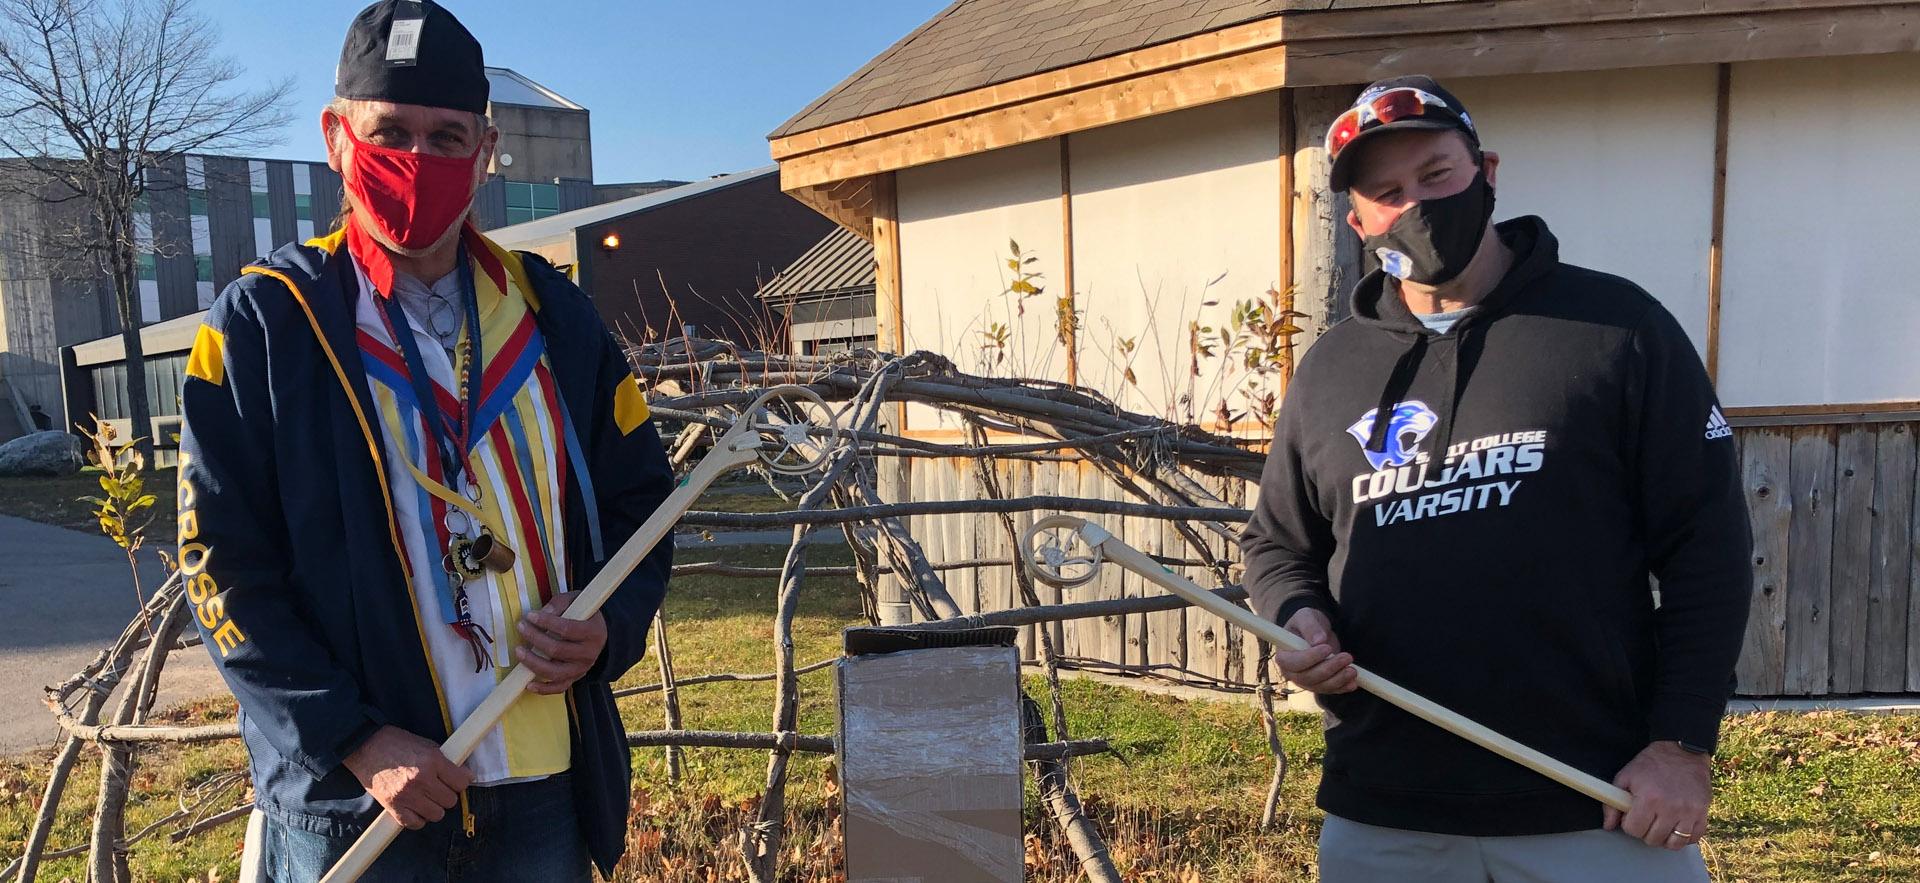 Frank and Paul Orazietti showcase lacrosse sticks